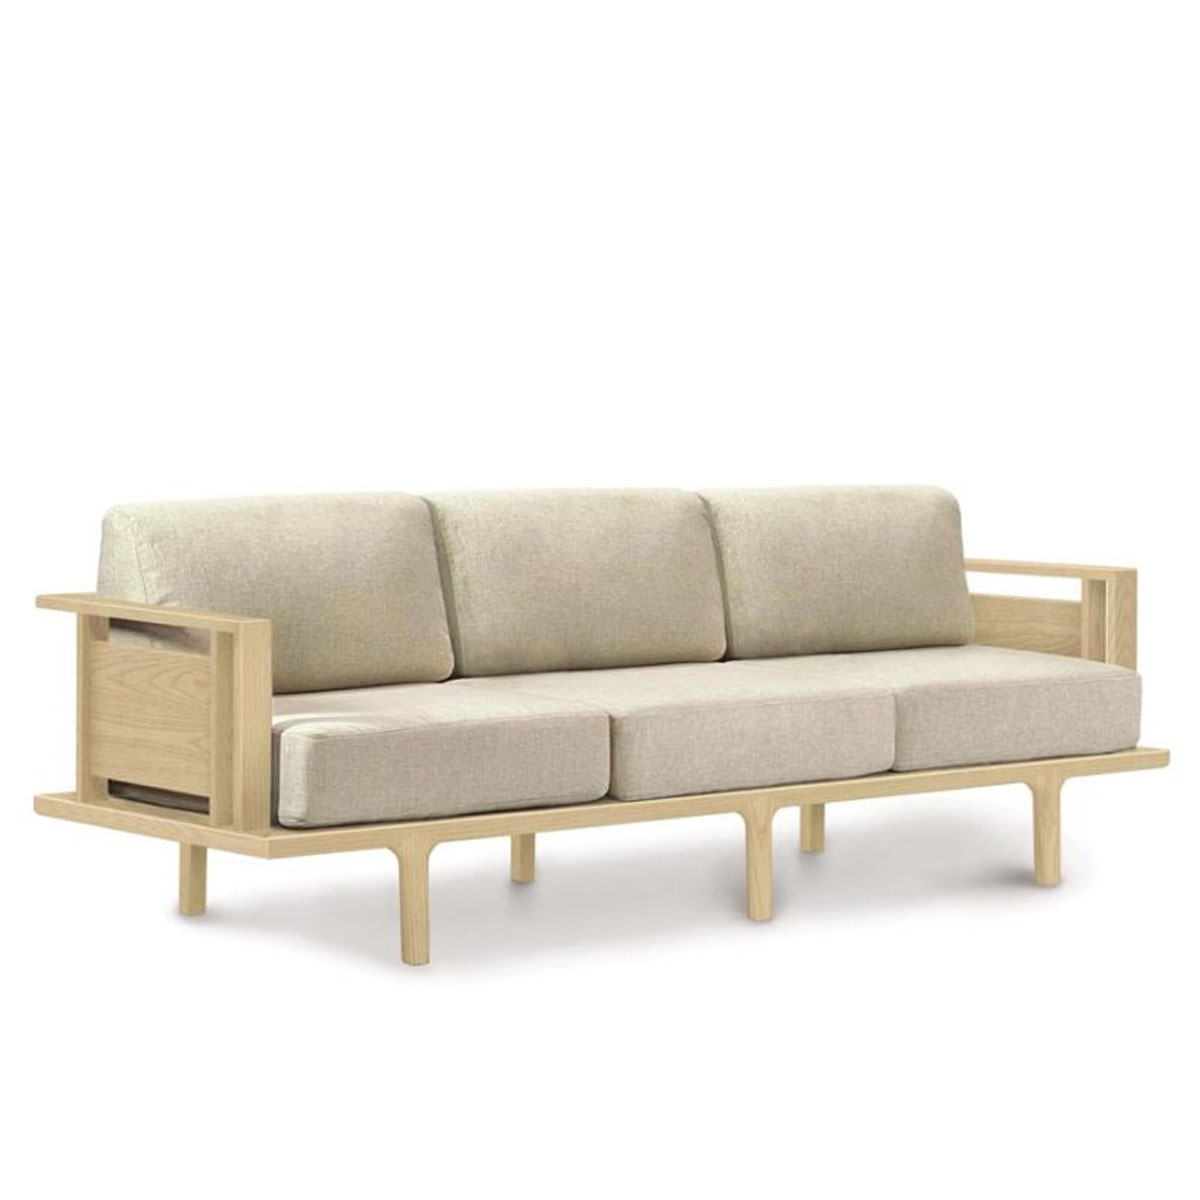 Copeland Sierra Sofa with Wood Panels in Oak